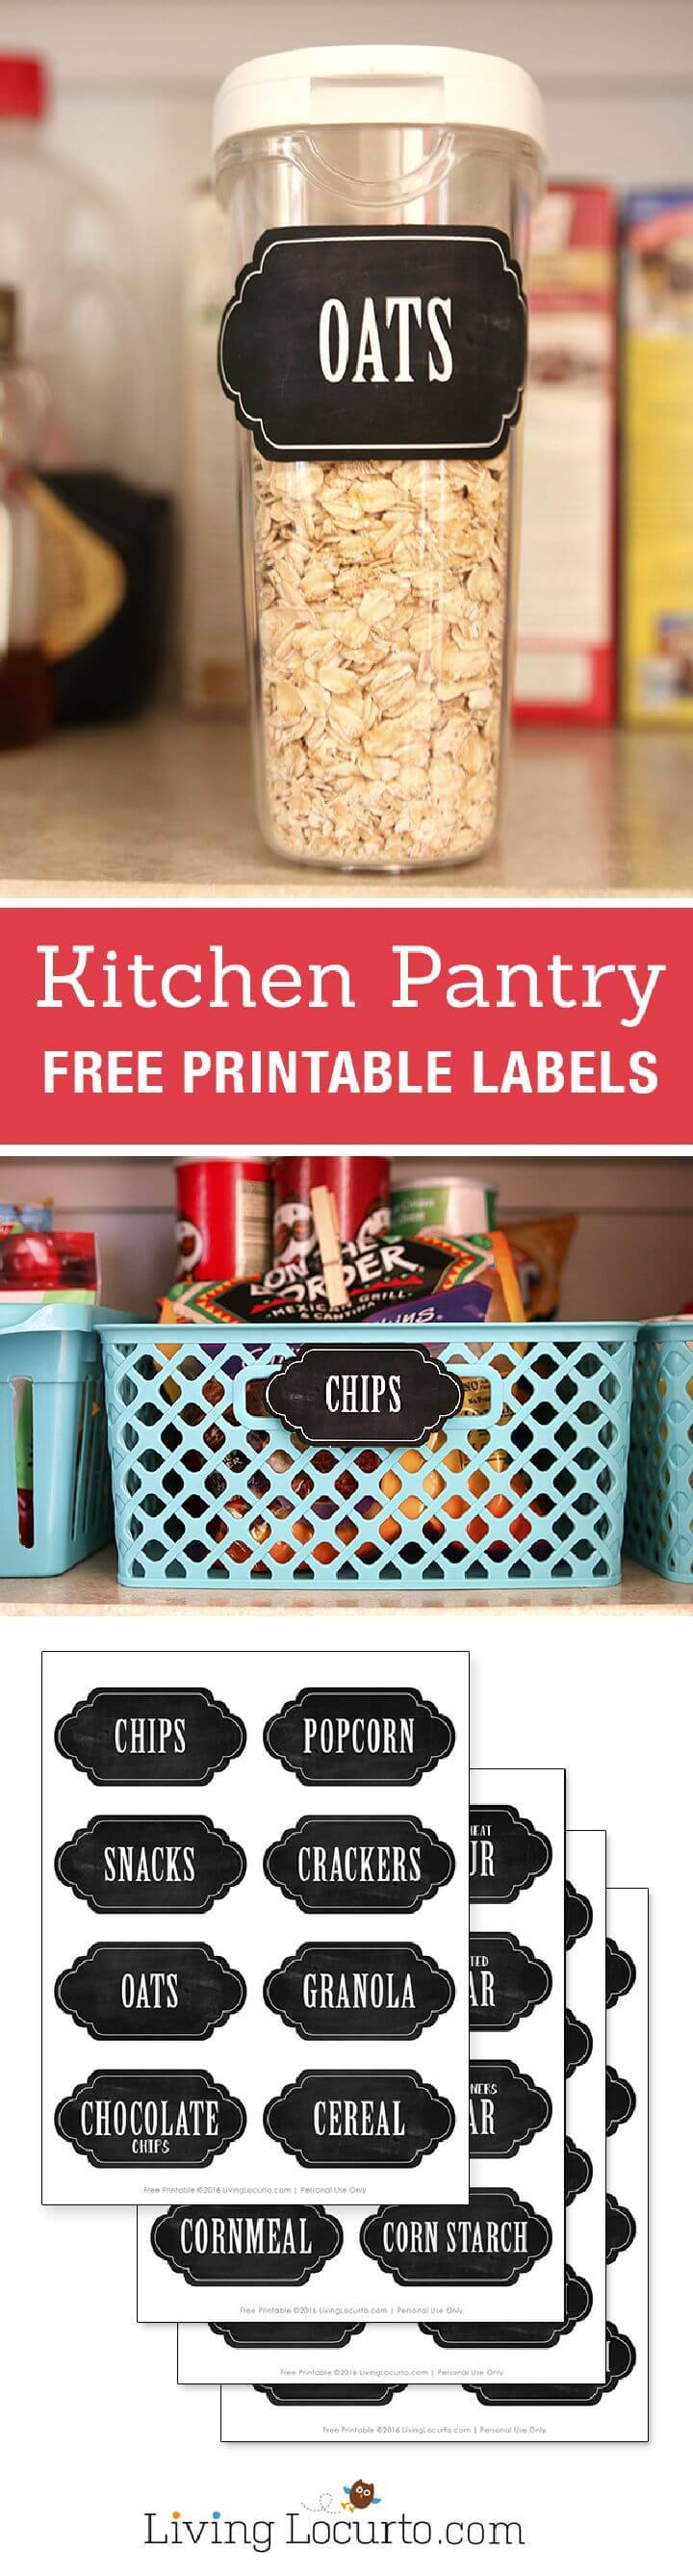 Kitchen Pantry Organization Free Printable